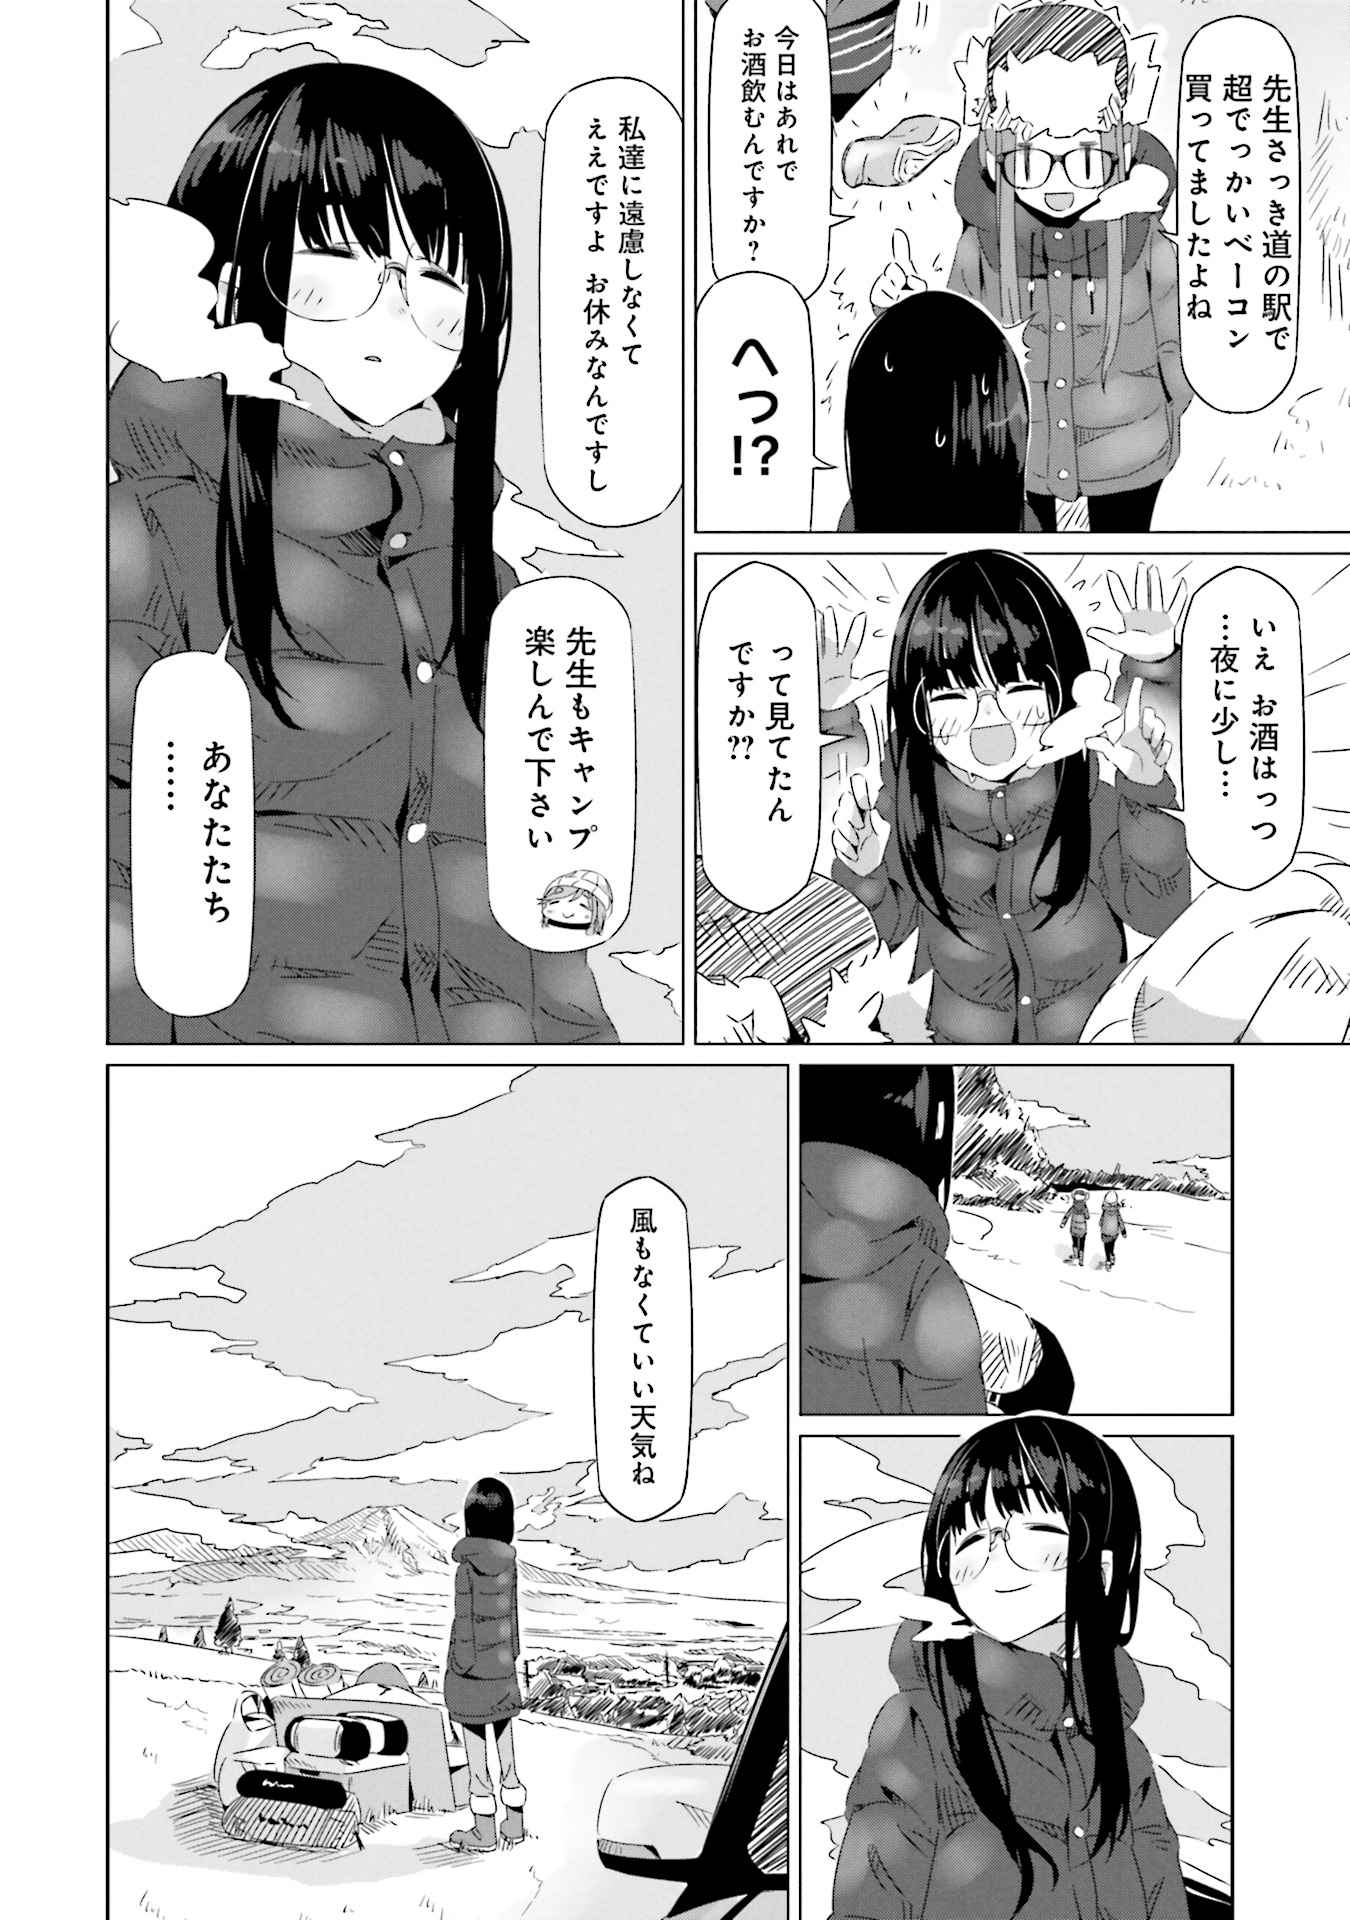 Yuru Camp - Chapter 20 - Page 4